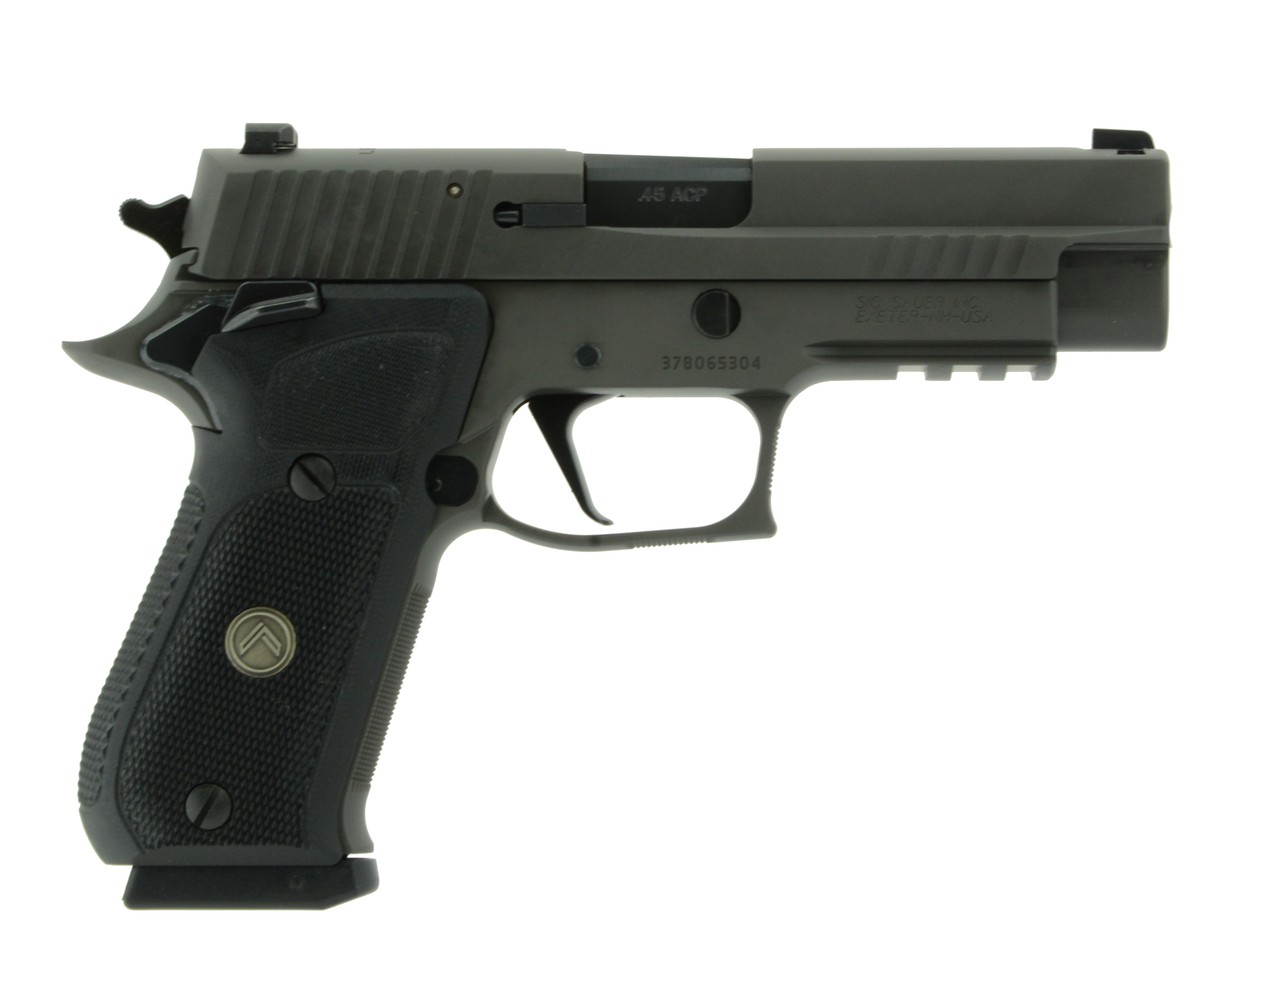 Sig Sauer P220 Legion .45 ACP caliber pistol for sale.